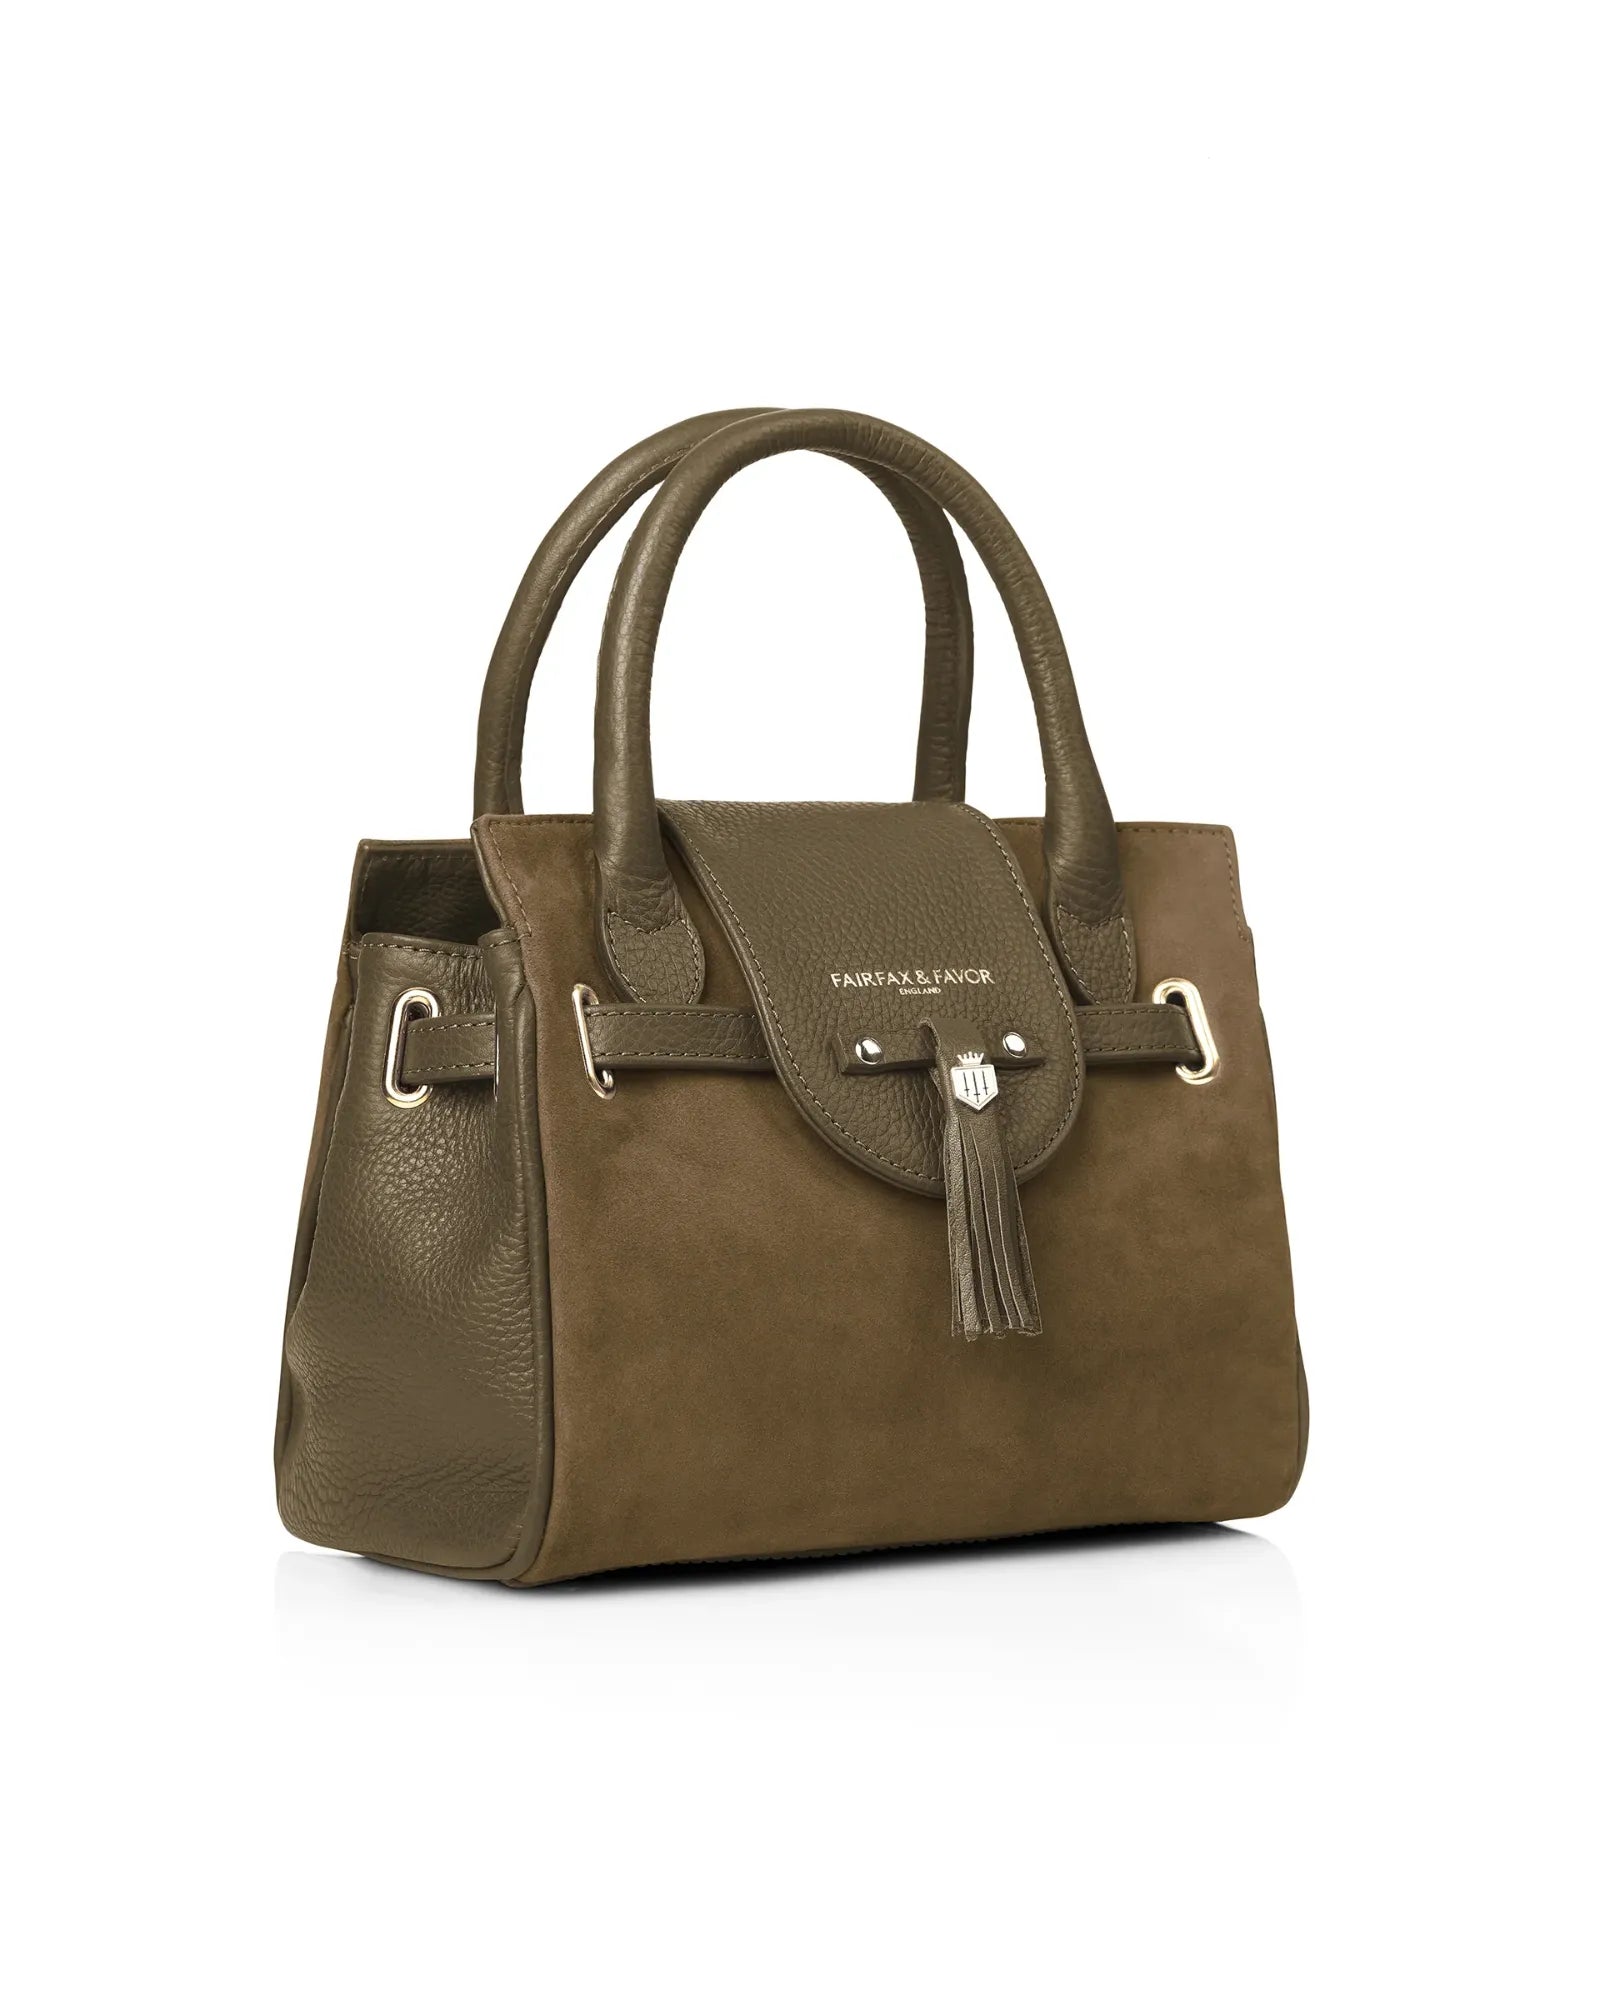 The Mini Windsor Handbag in Olive Suede